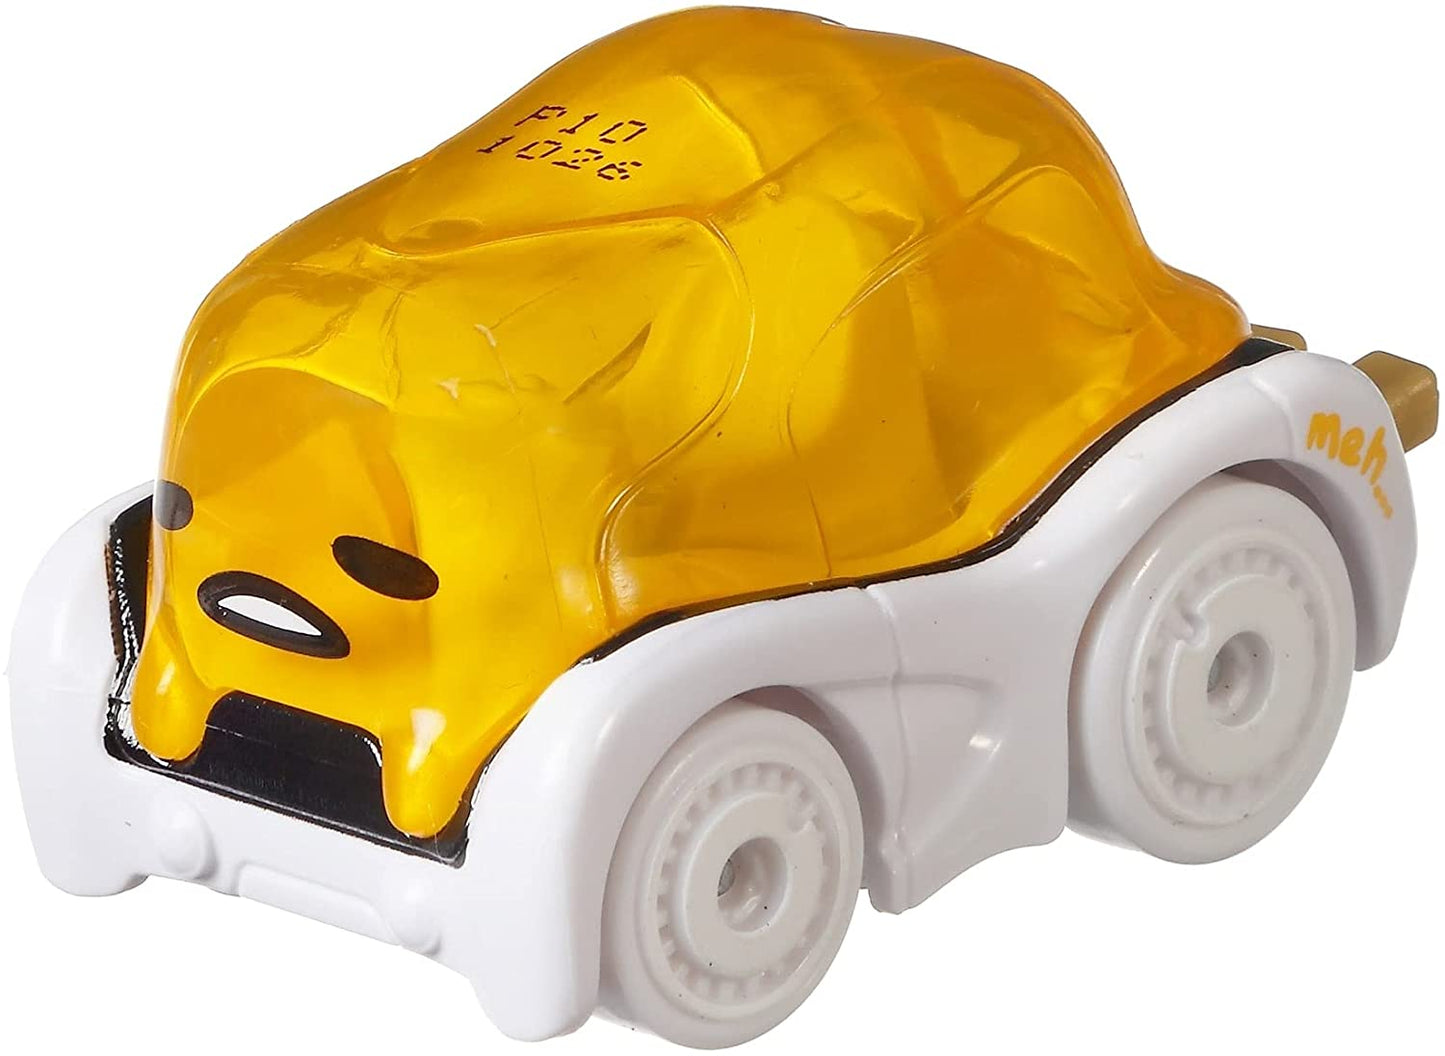 Hot Wheels Character Cars - Gudetama Egg Japanese Animation - Yellow & White - 1:64 Scale